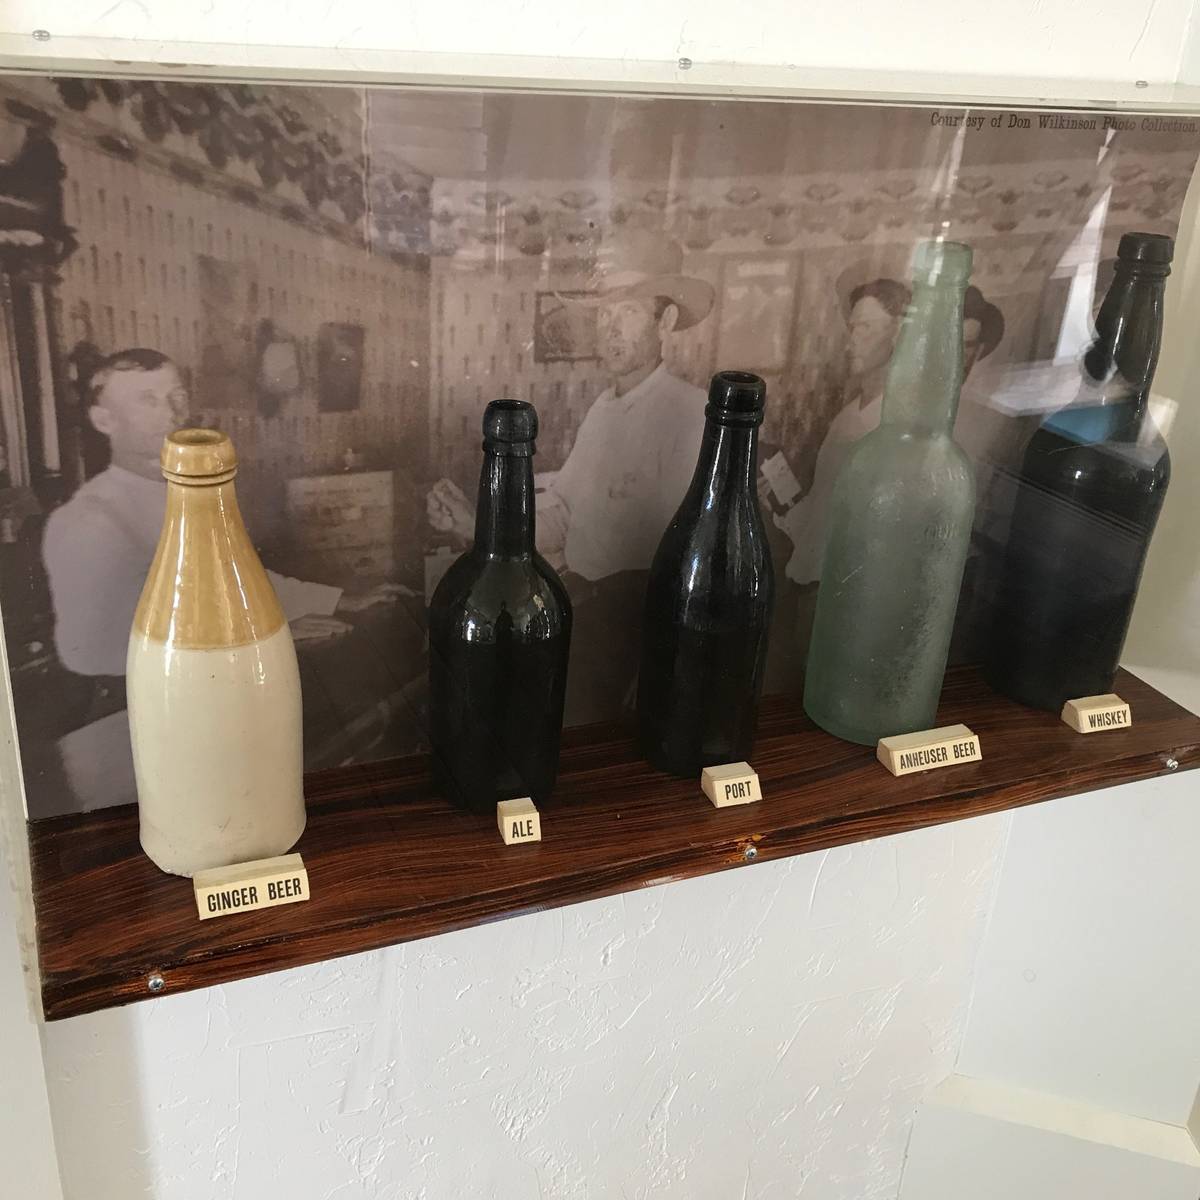 Bottles on display at Fort McKavett museum